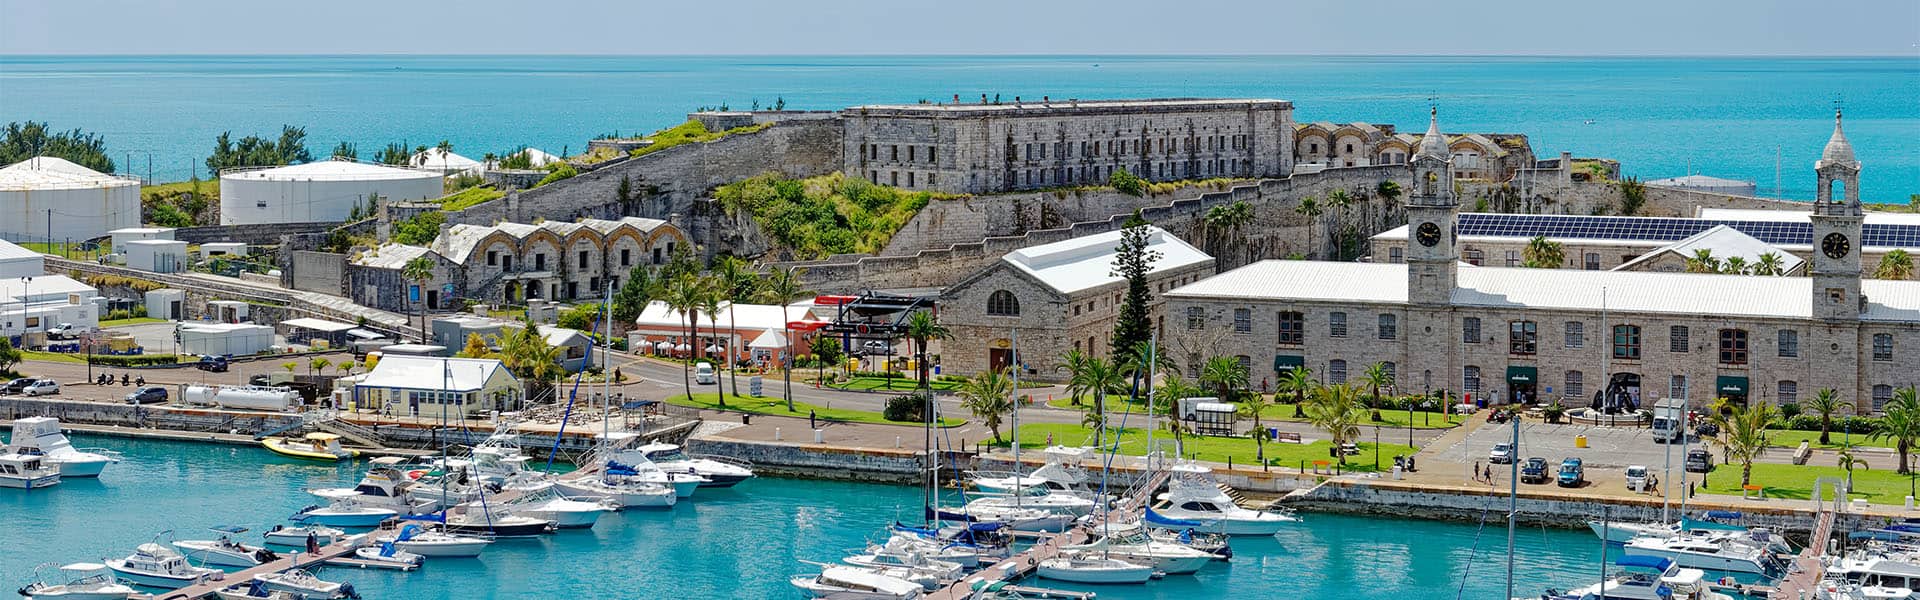 Bermudas: Royal Naval Dockyard